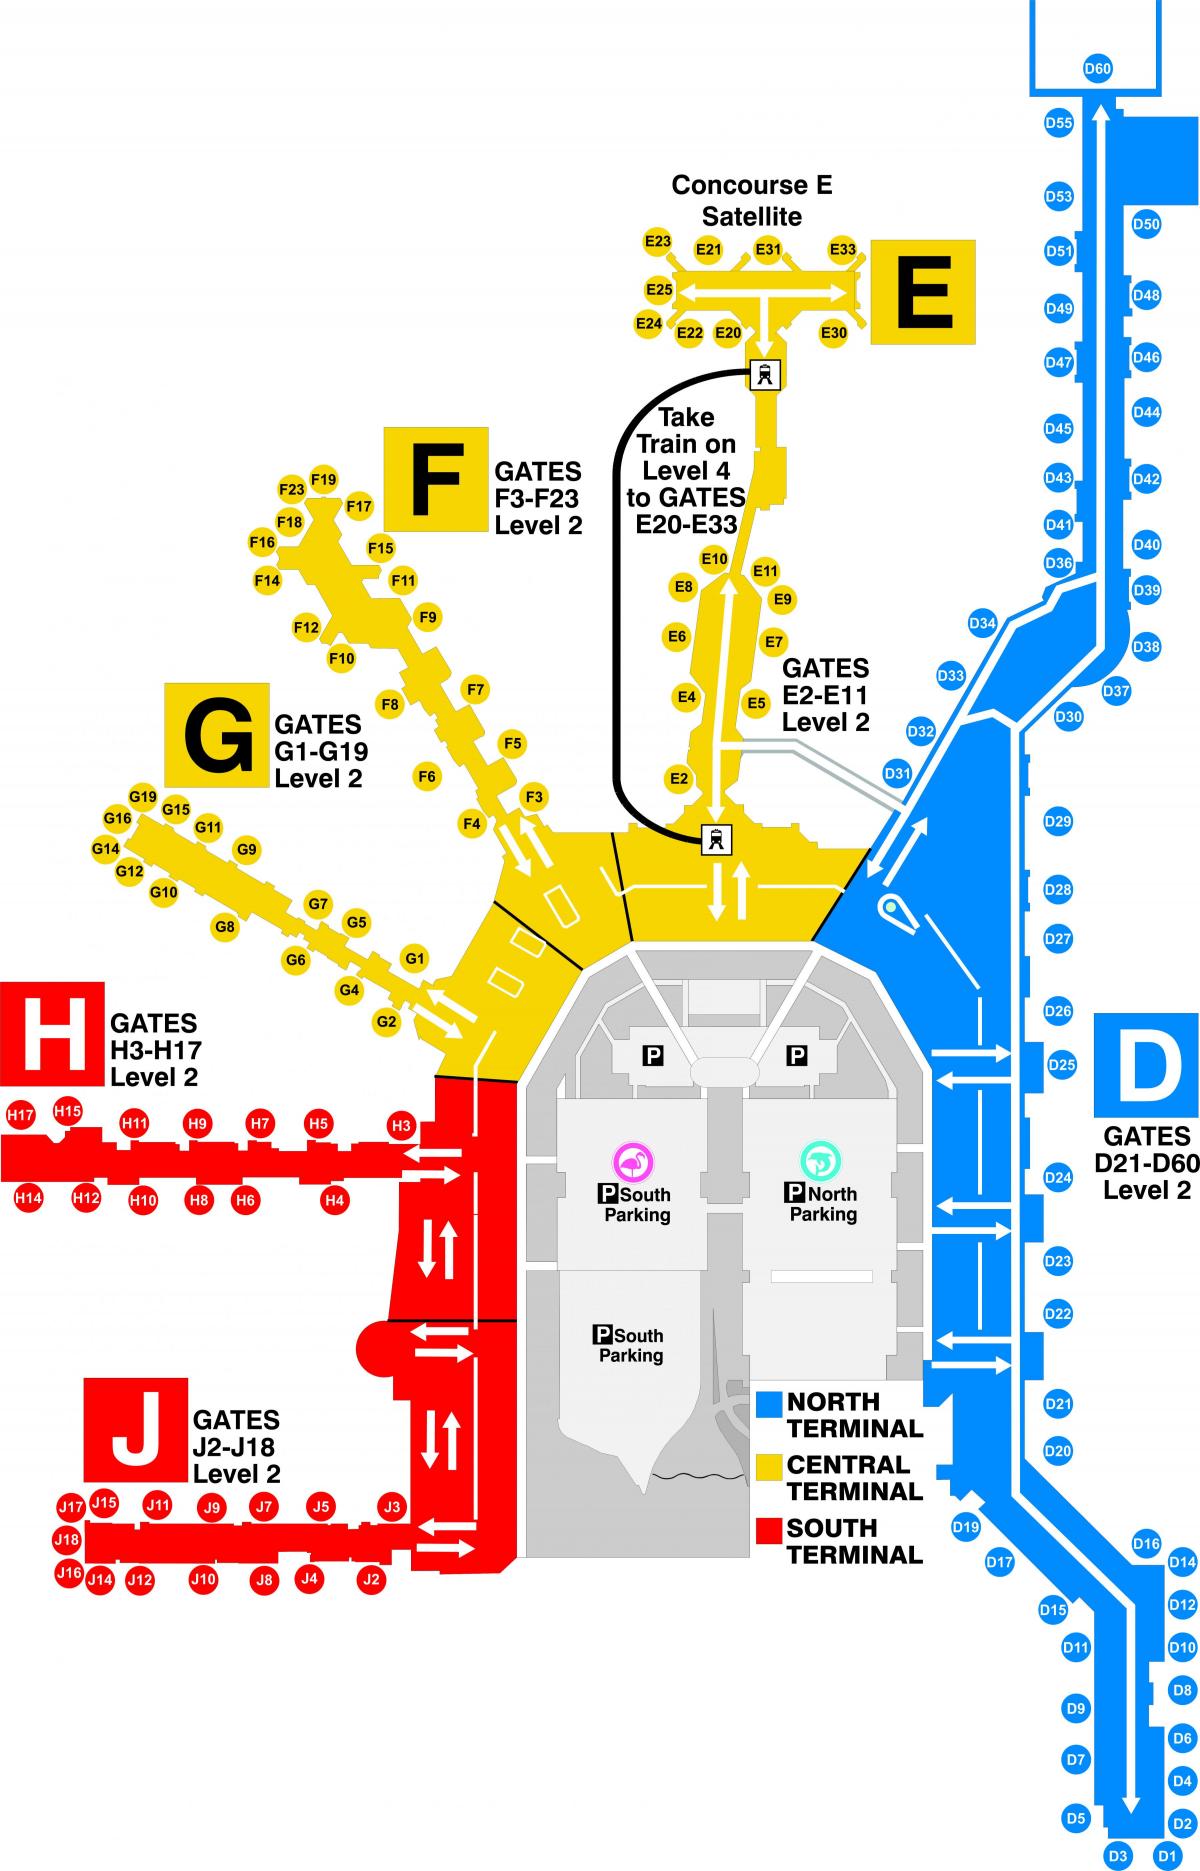 Miami airport terminal mapy